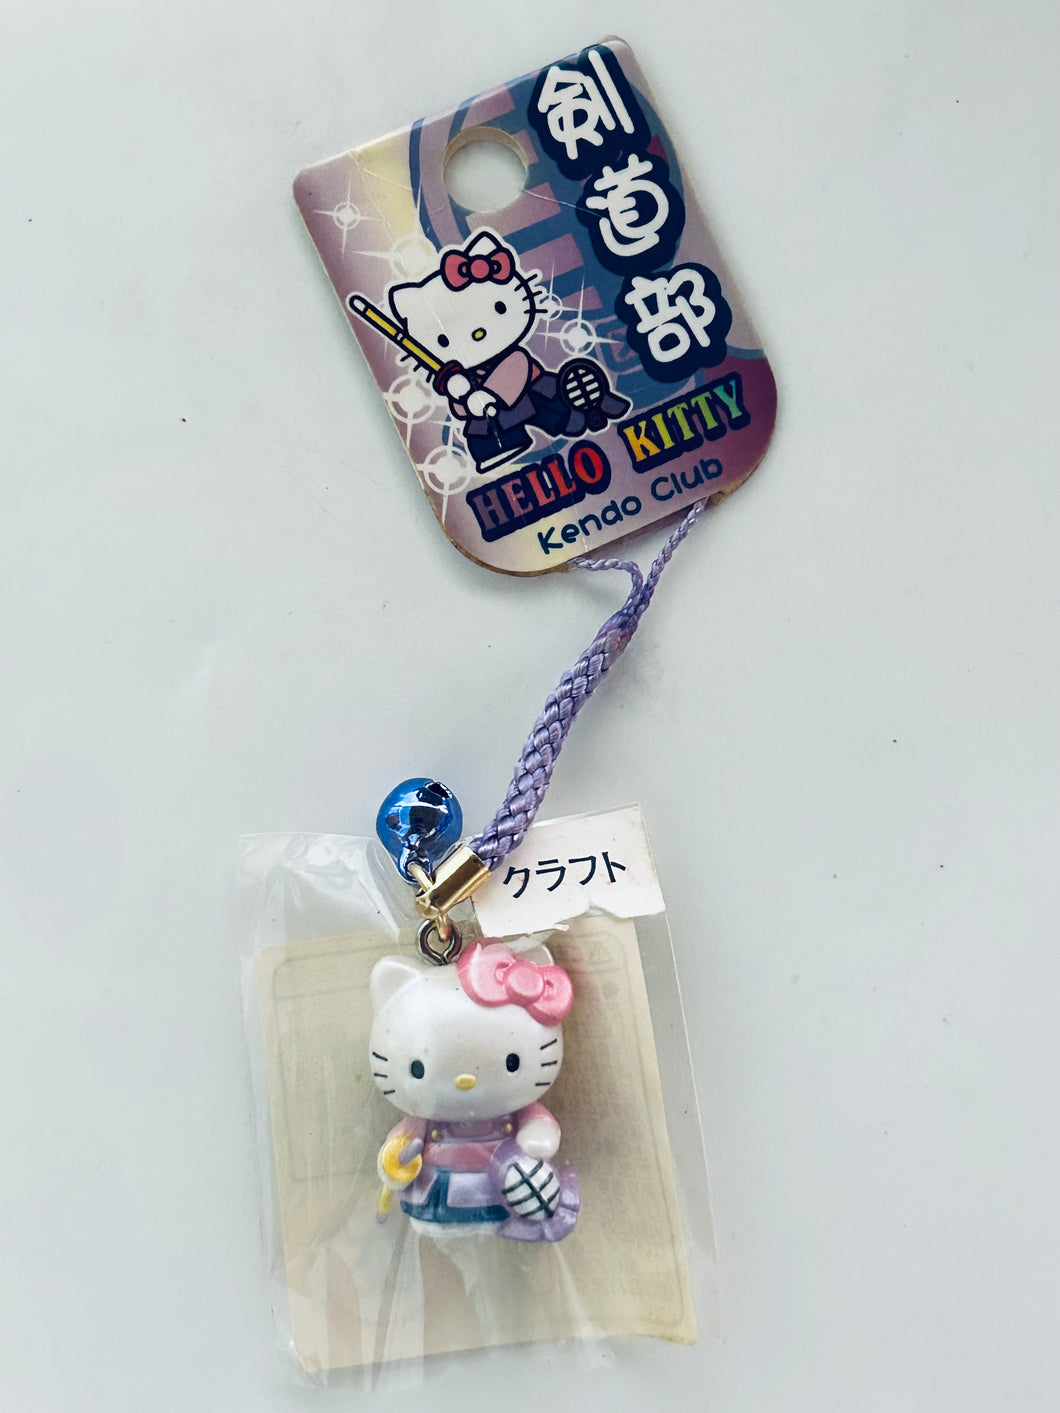 Hello Kitty - Charm Strap - Netsuke - Kendo Club